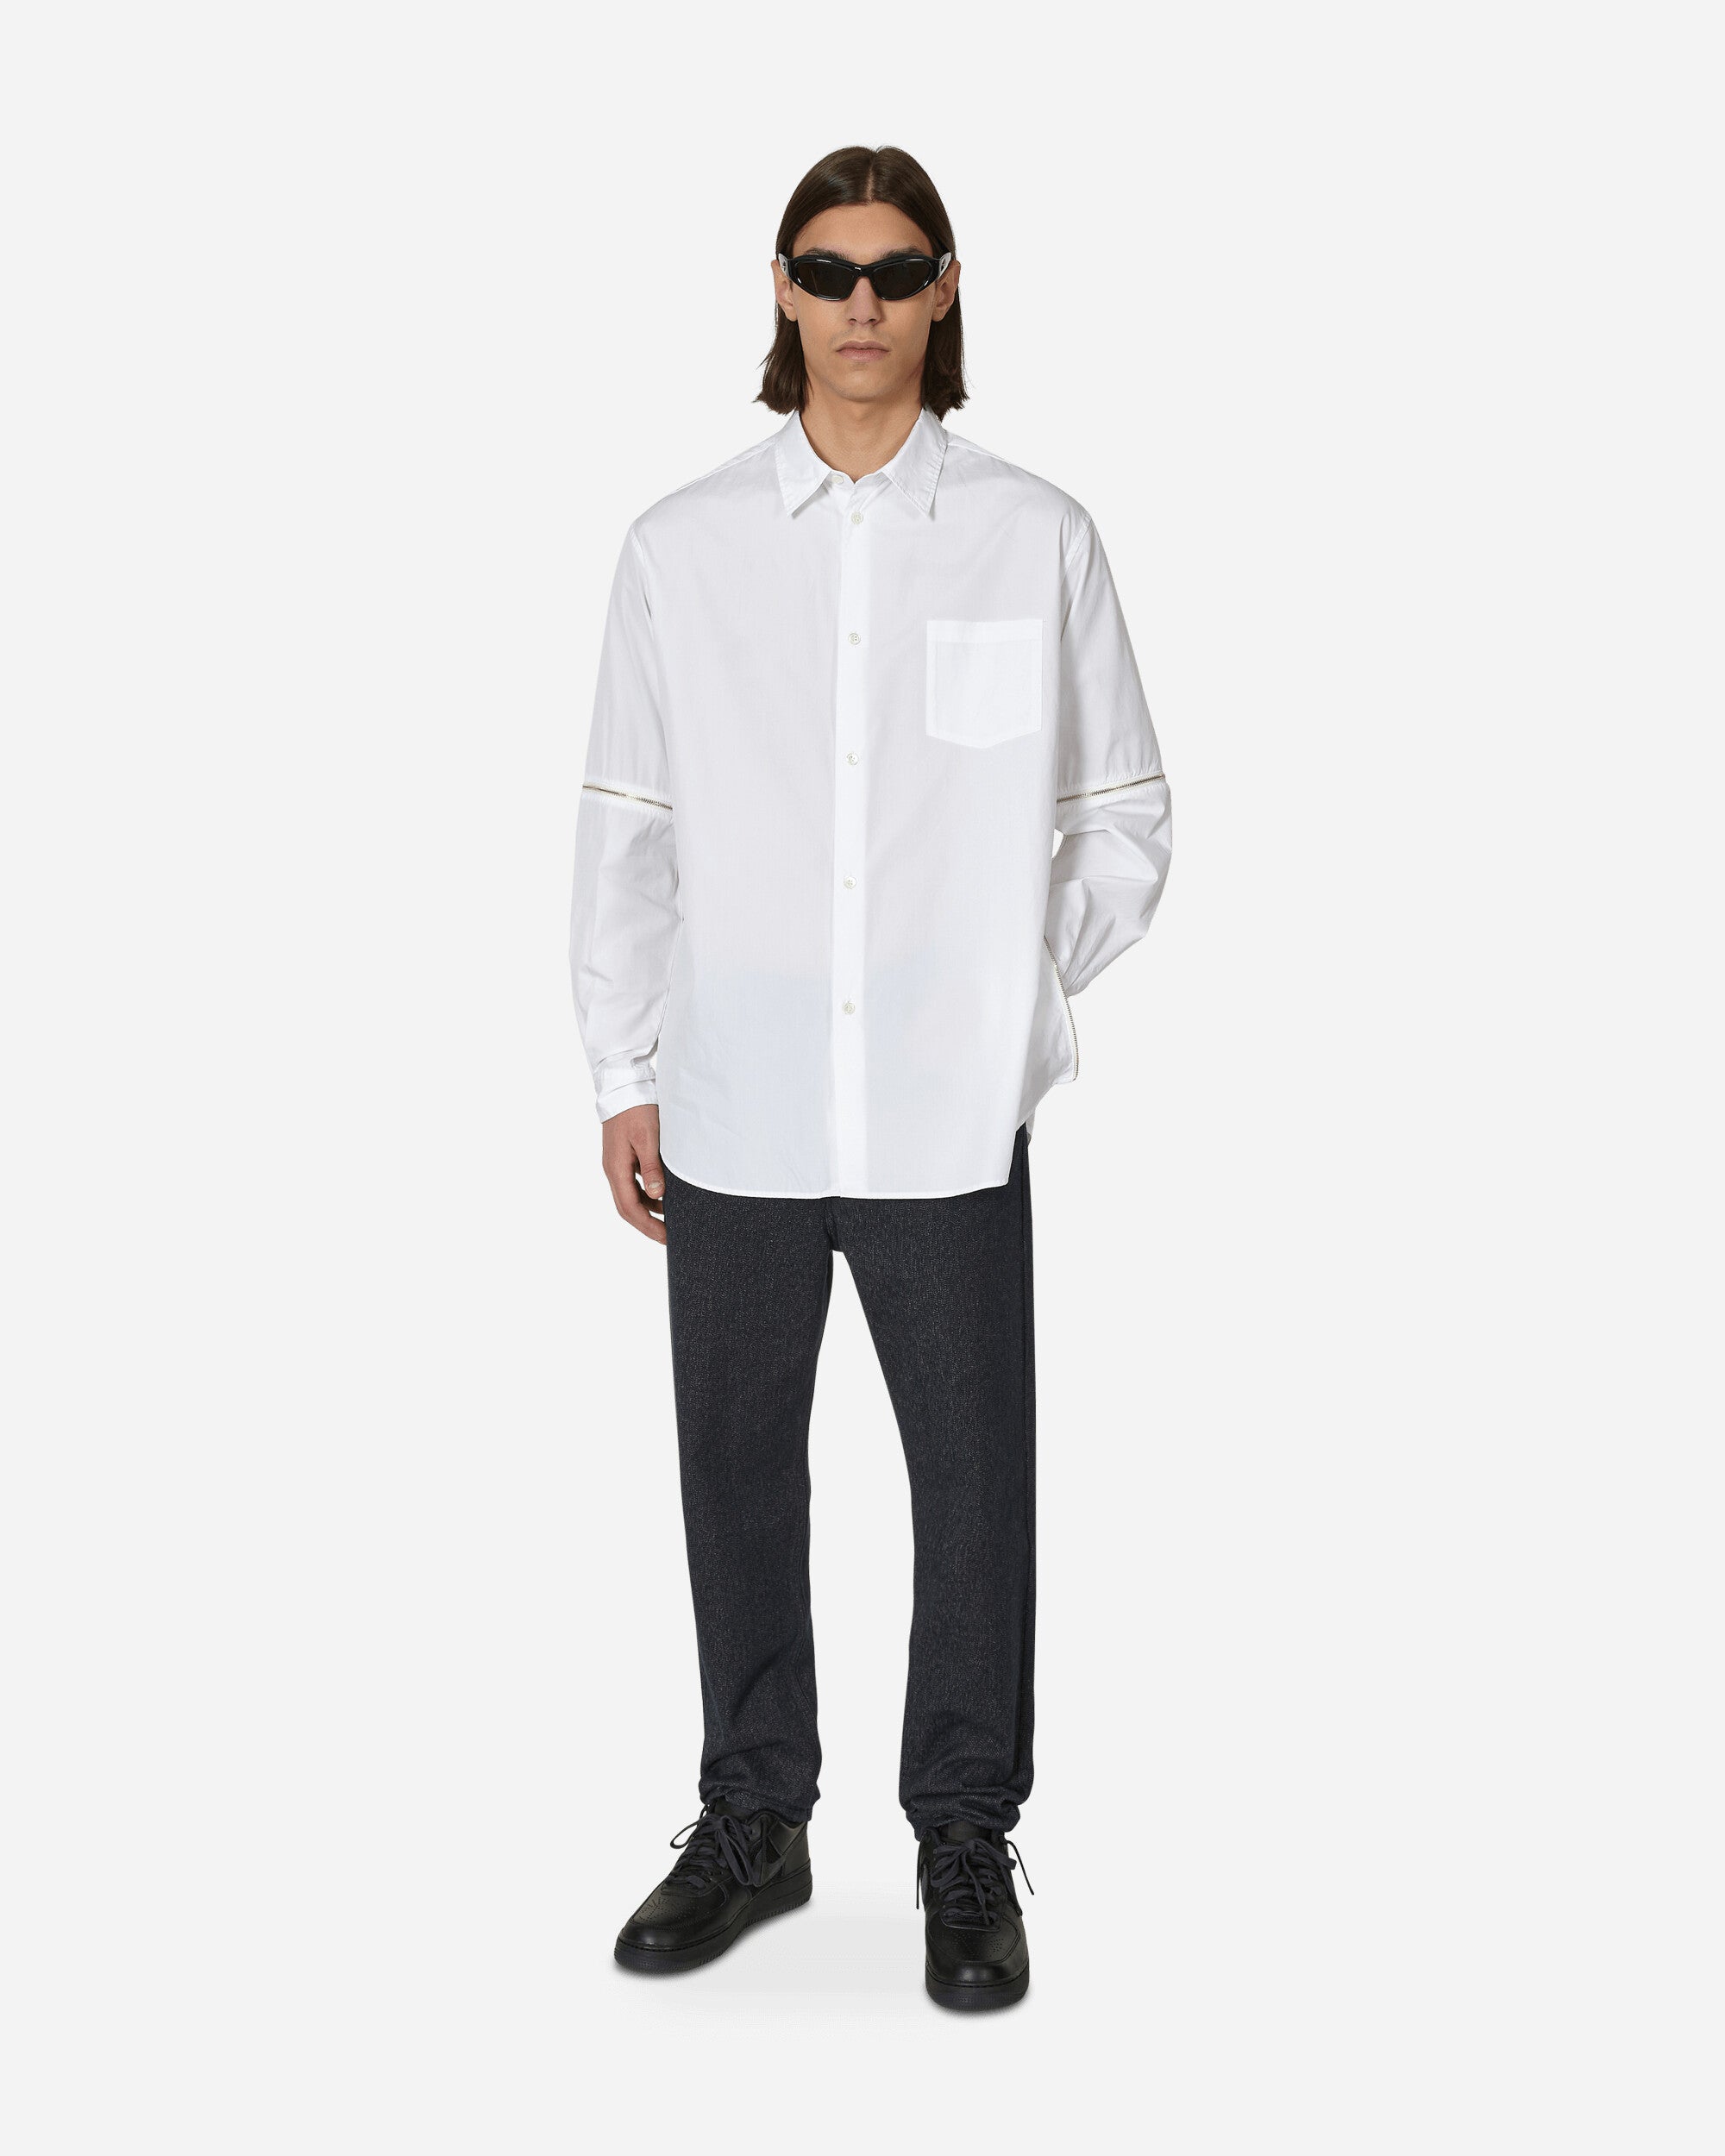 Undercover Zipper Shirt White Shirts Longsleeve Shirt UC1C4407-1 001